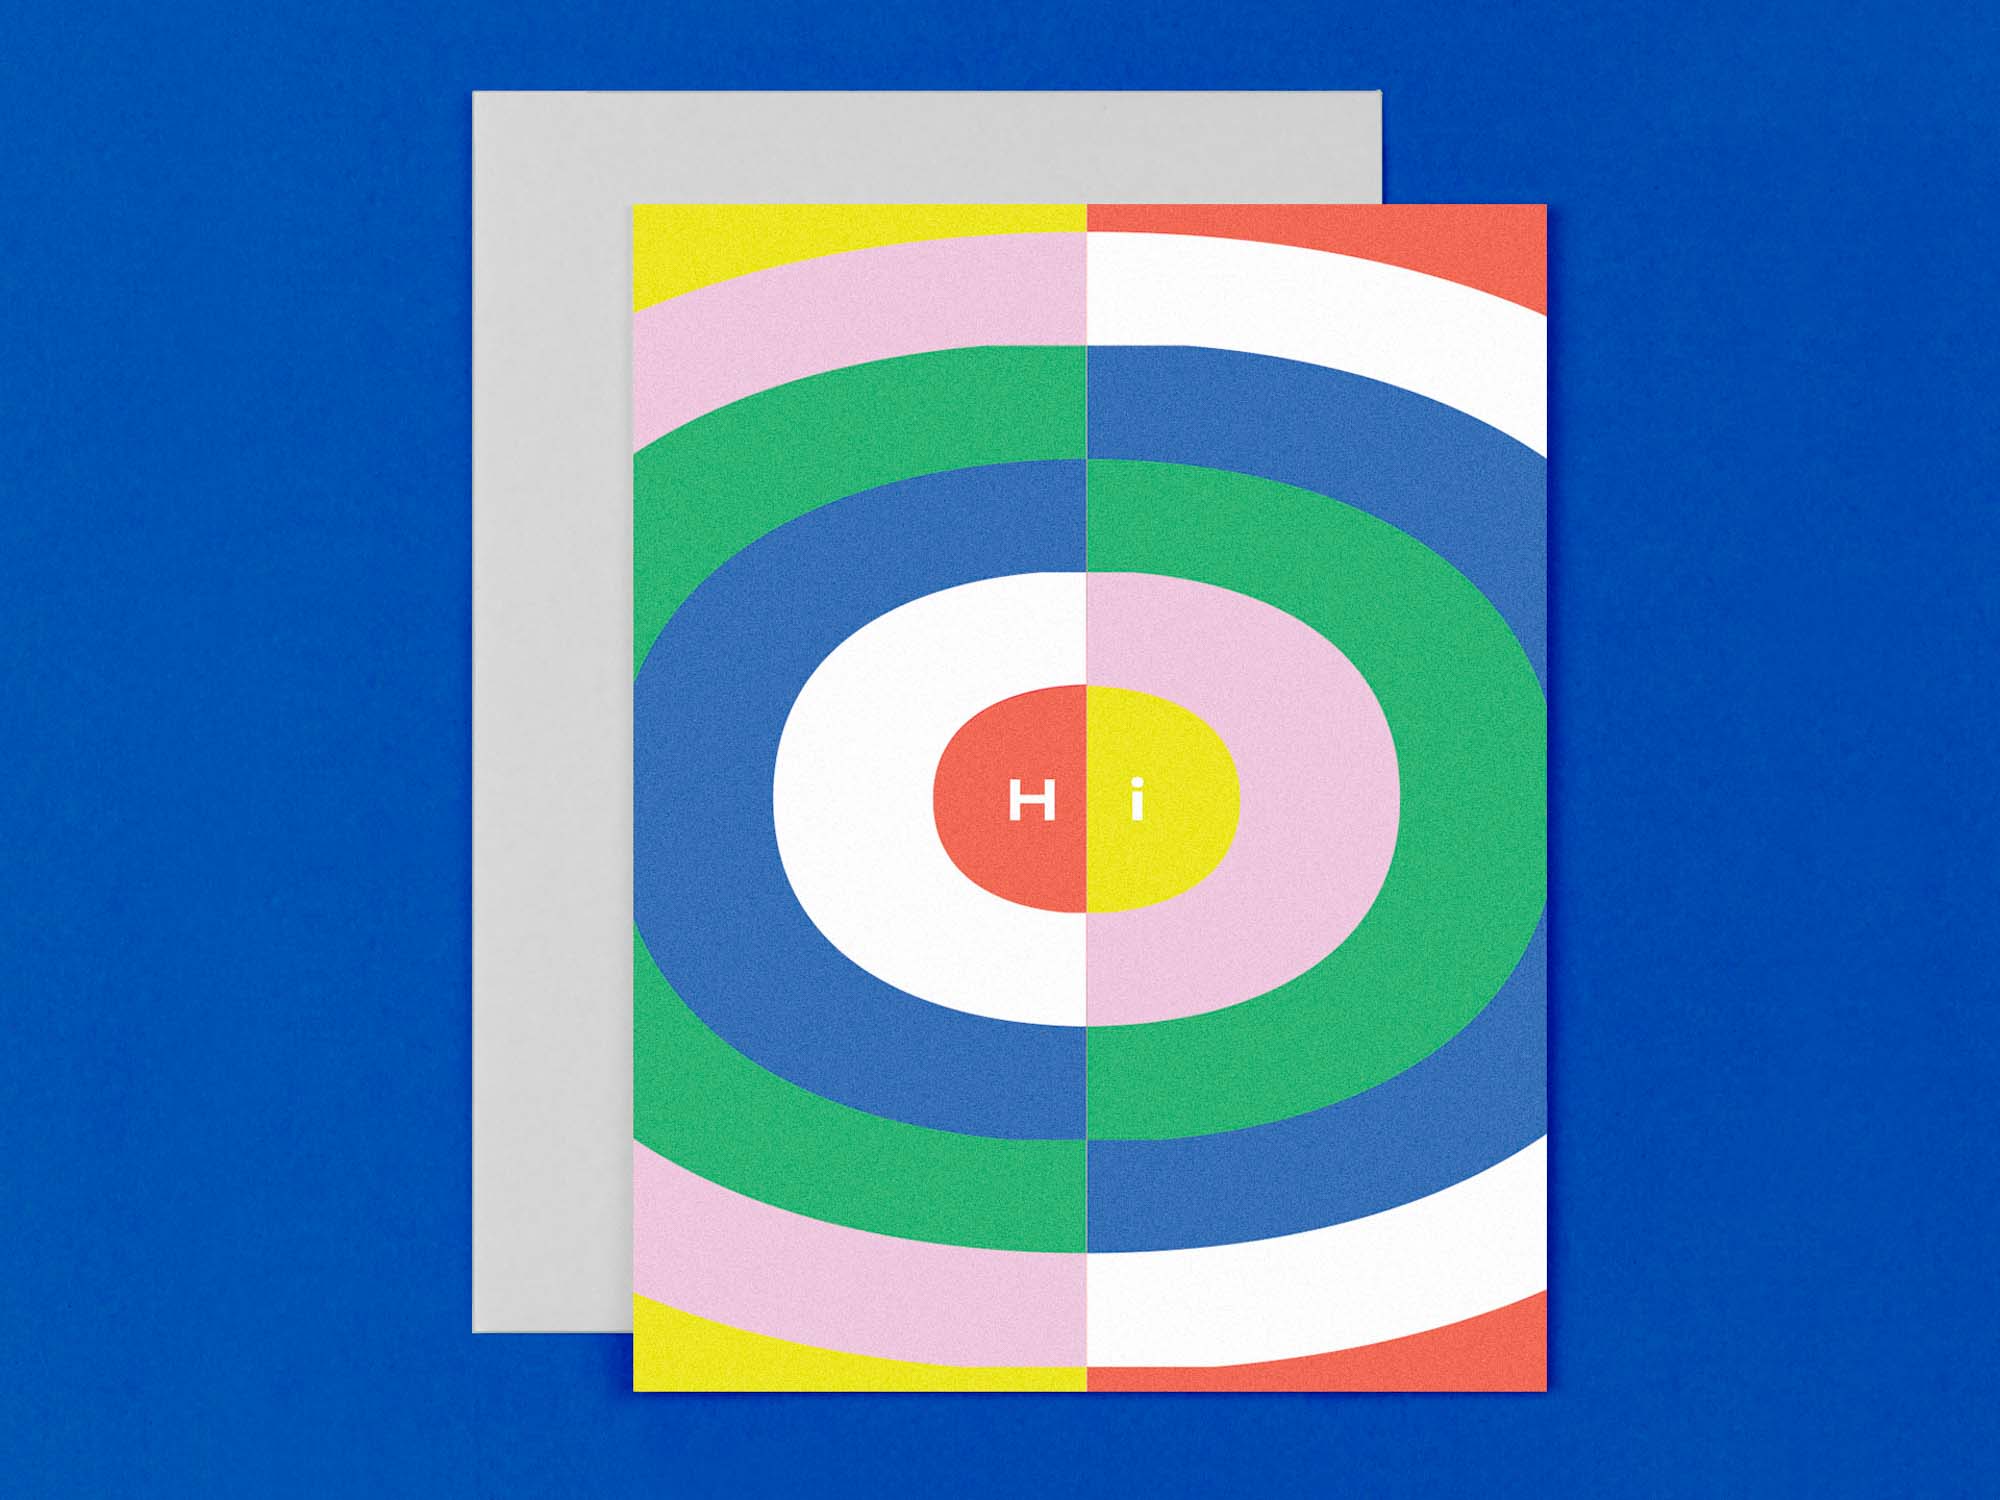 "Hi" card. Circles in circles in circles op art inspired design. Made in USA by @mydarlin_bk